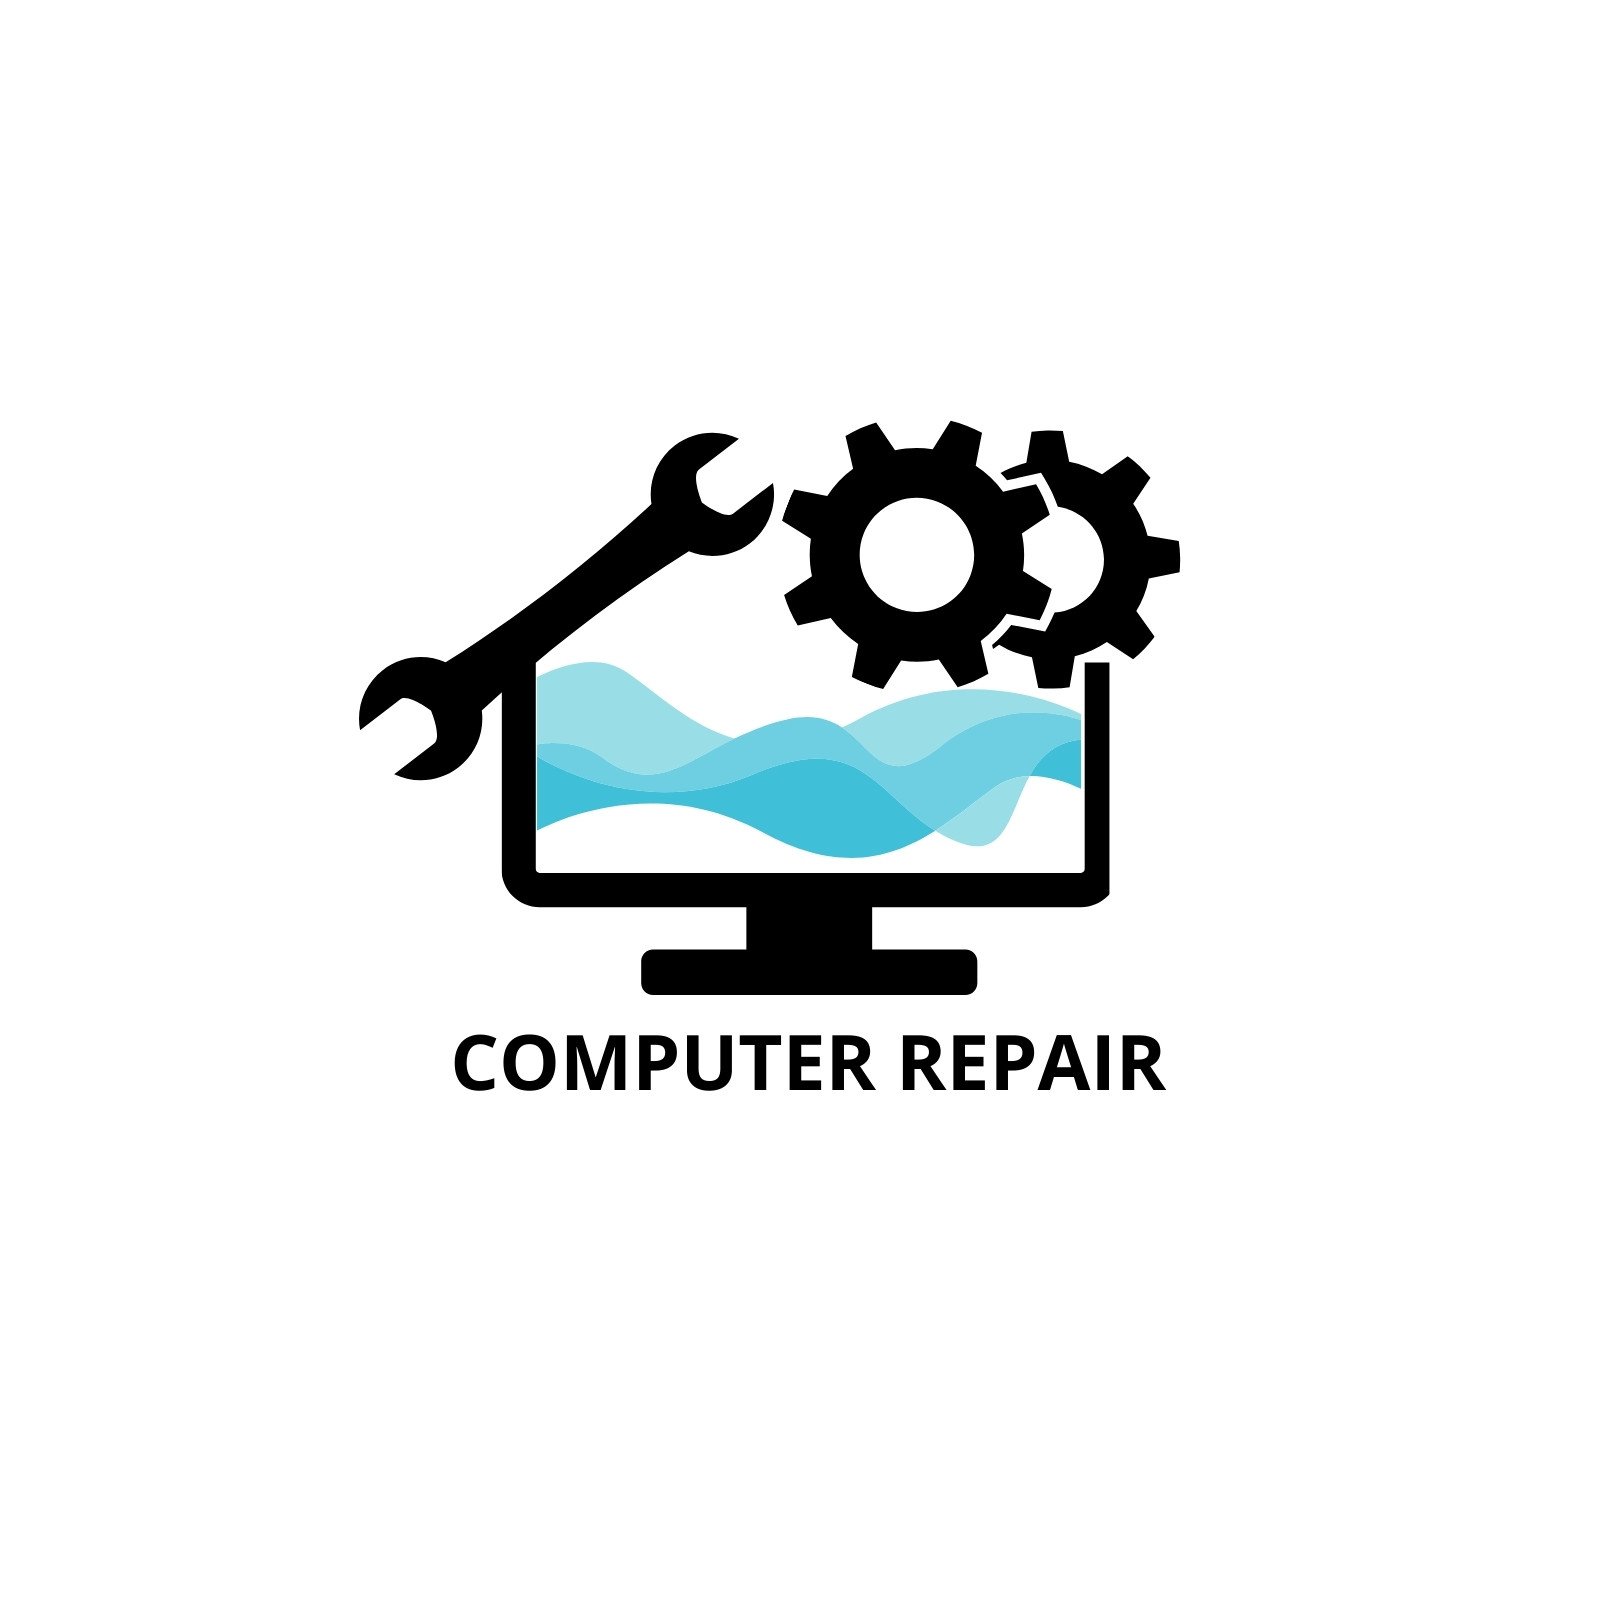 computer repair service logo